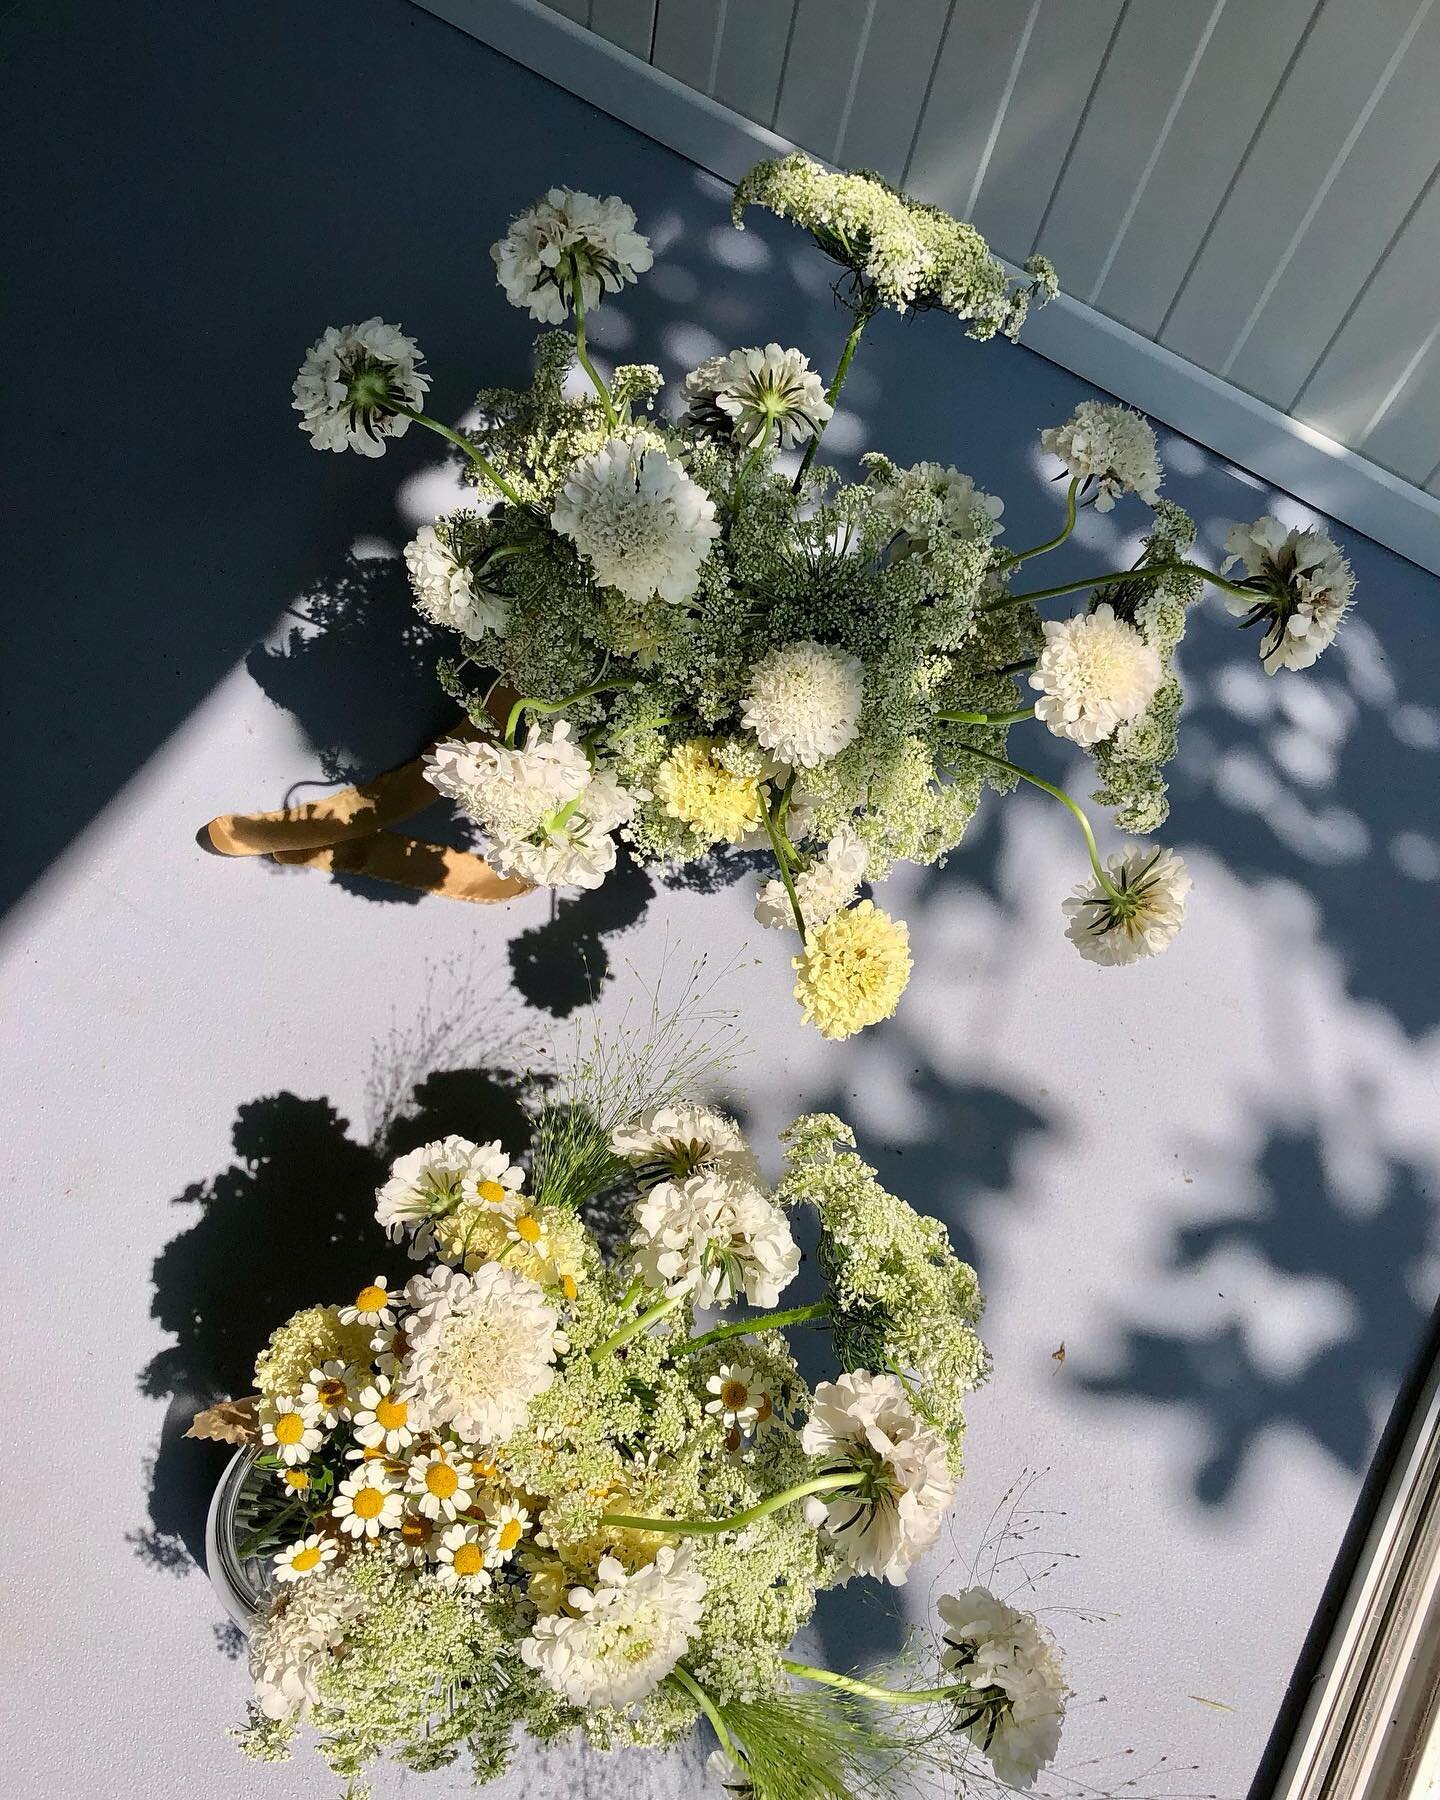 Fluffy bouquets forever 🫶
Hampshire grown scabiosa, Queen Anne&rsquo;s lace and daisies 🌼
.
.
.
.

#minimalistwedding #sussexflorist #londonflorist #floralstories #sussexwedding #stylingtheseasons #flowerstudio #sussexweddingflorist #weddinginspira